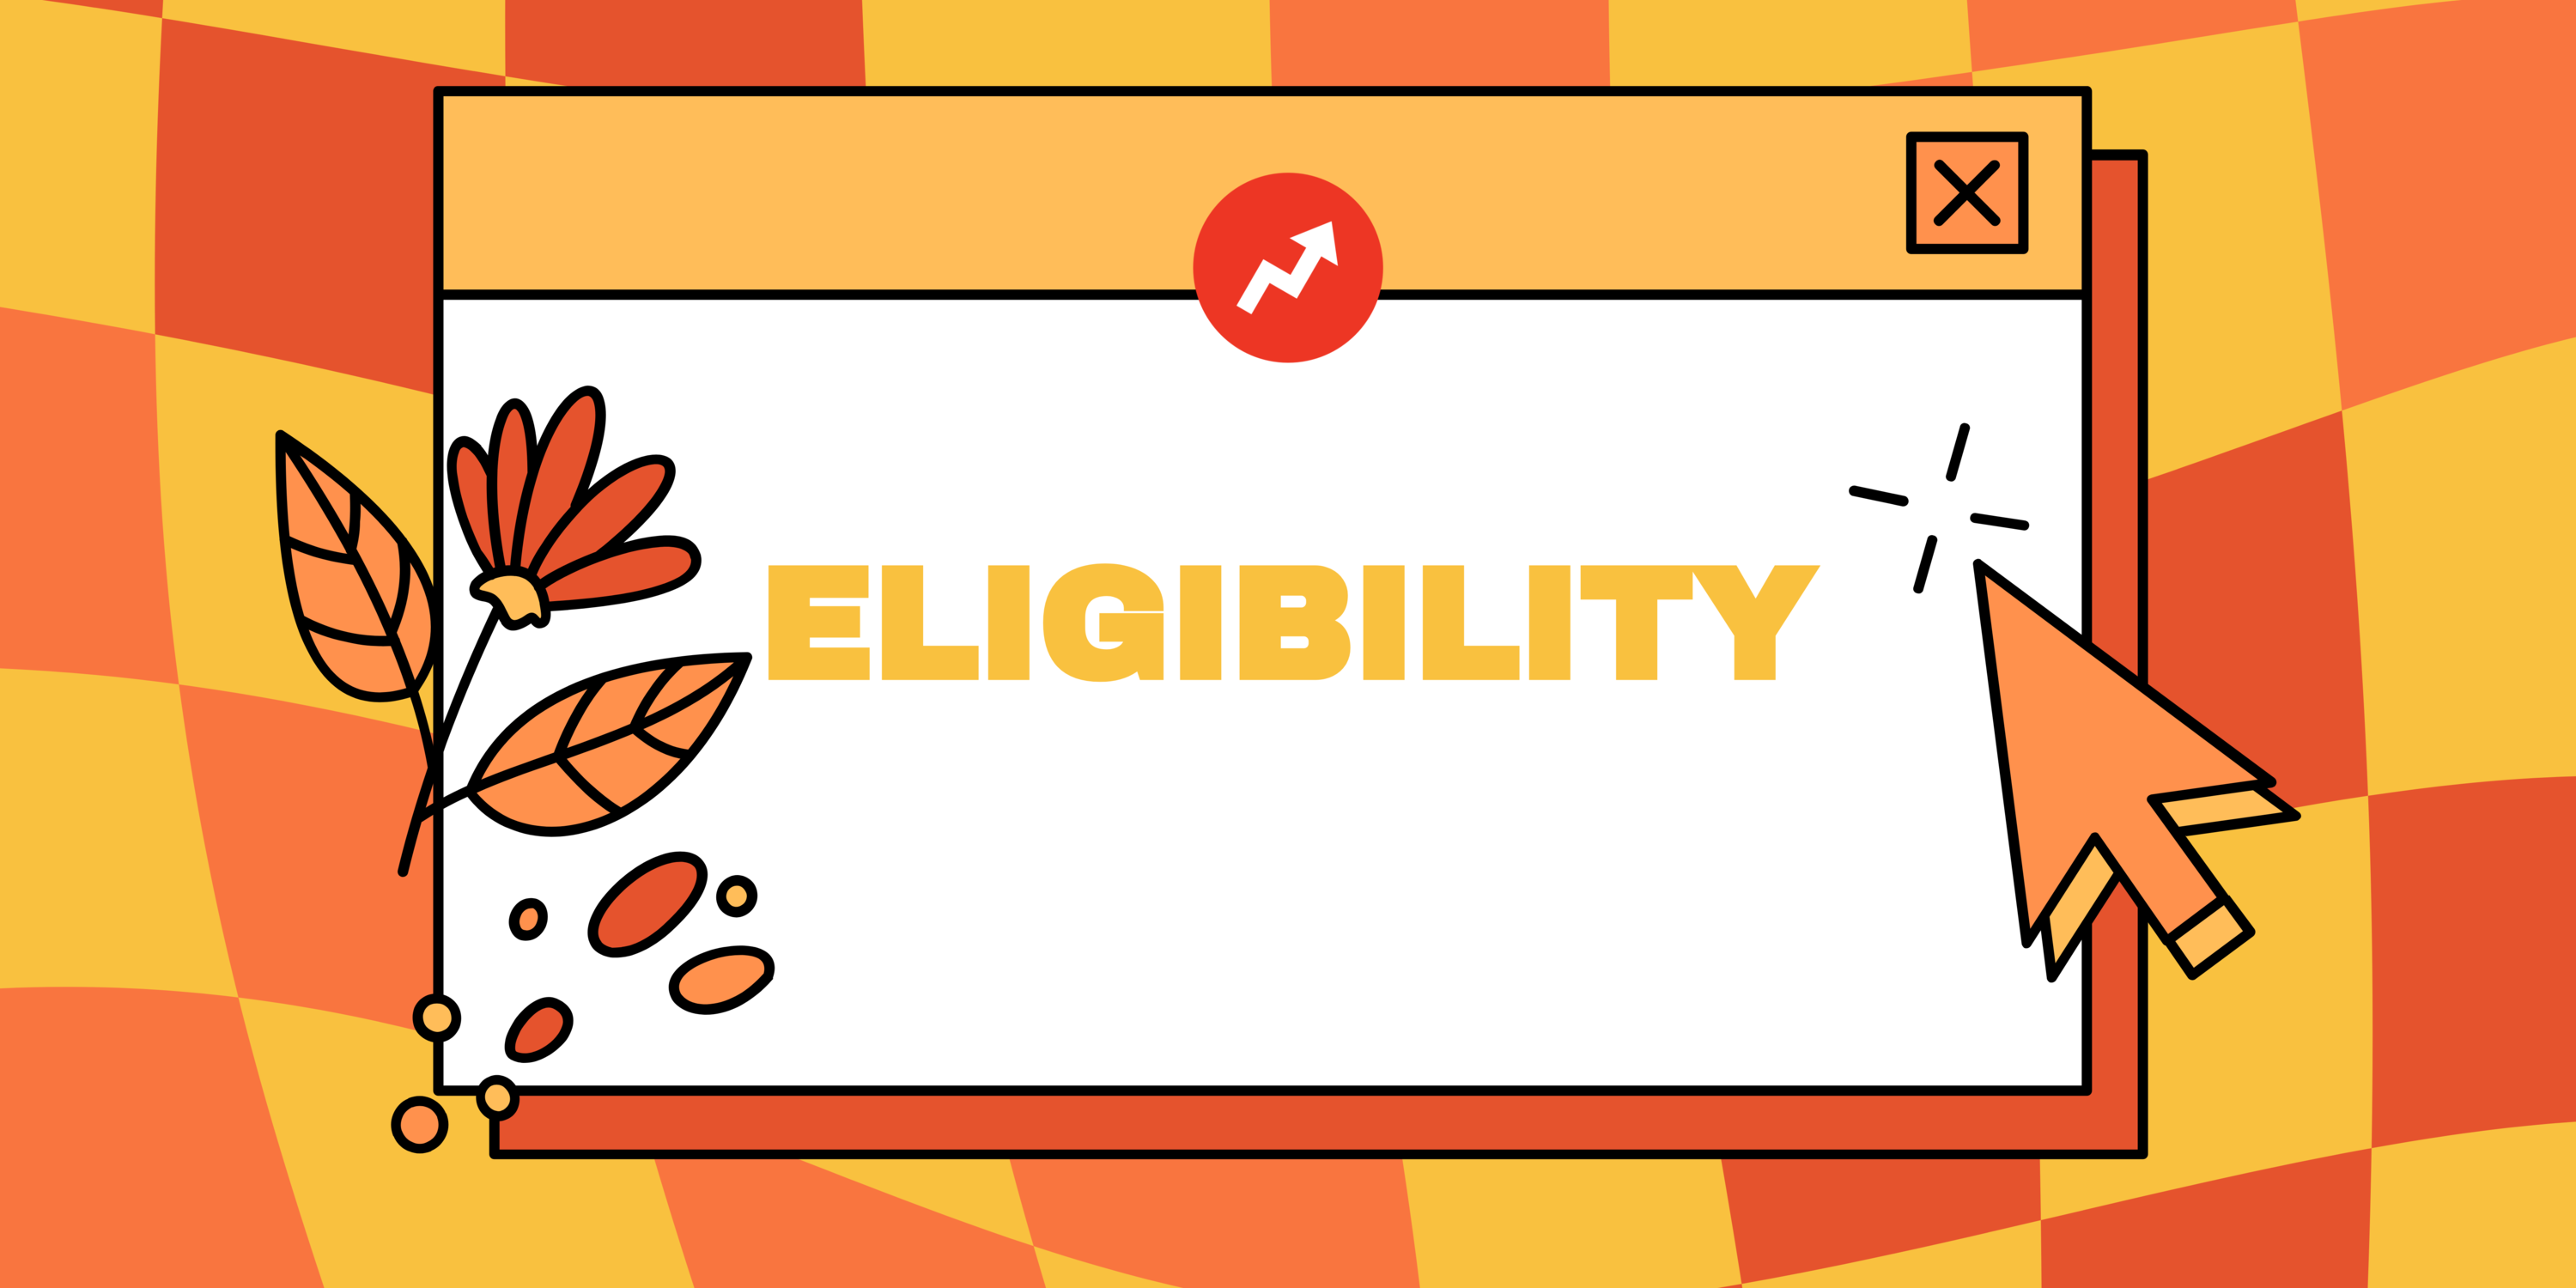 eligibility